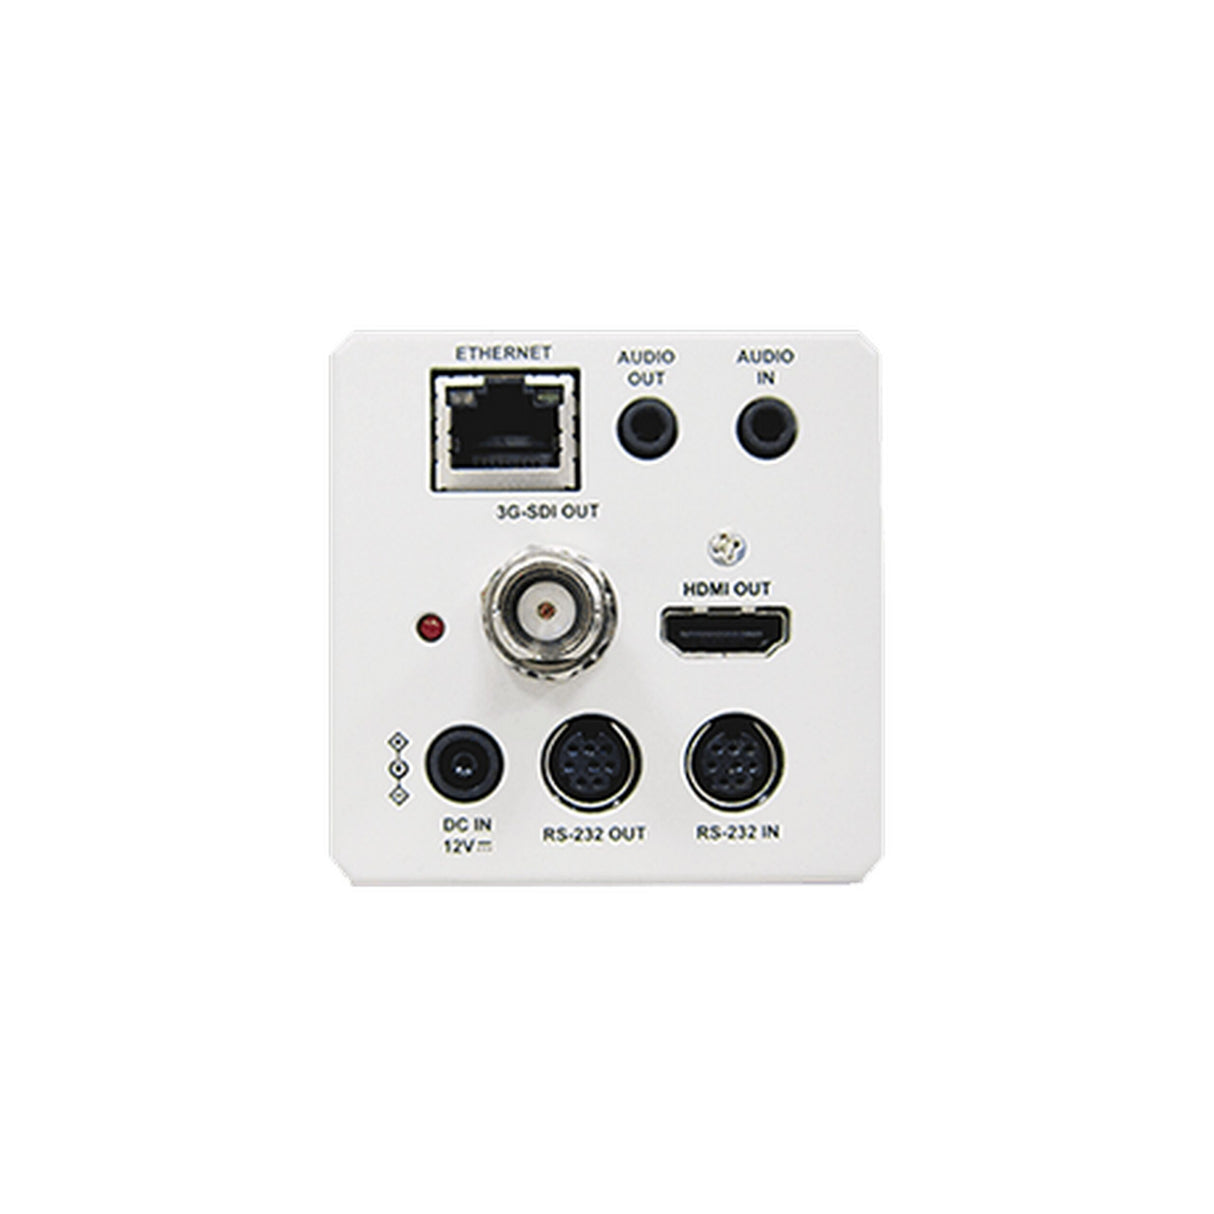 Lumens VC-BC601P 1080p 60fps 30x Box Camera, White